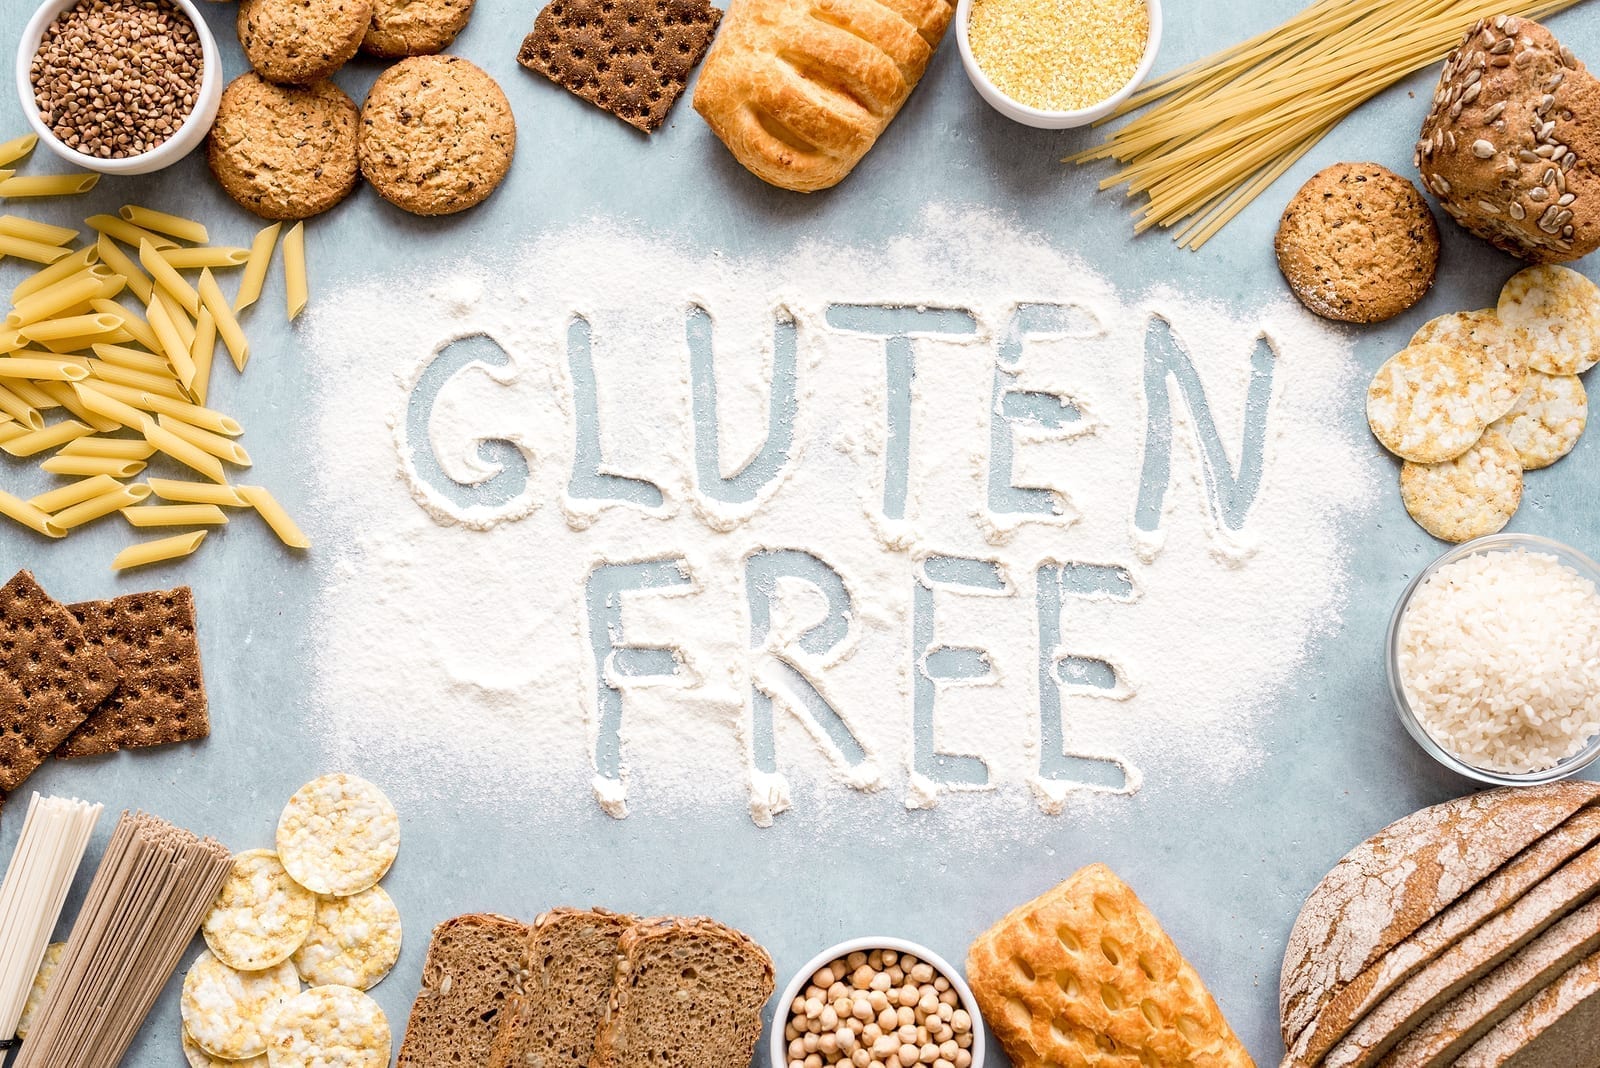 20 Ways to Start Your Gluten-free Lifestyle - Goodman